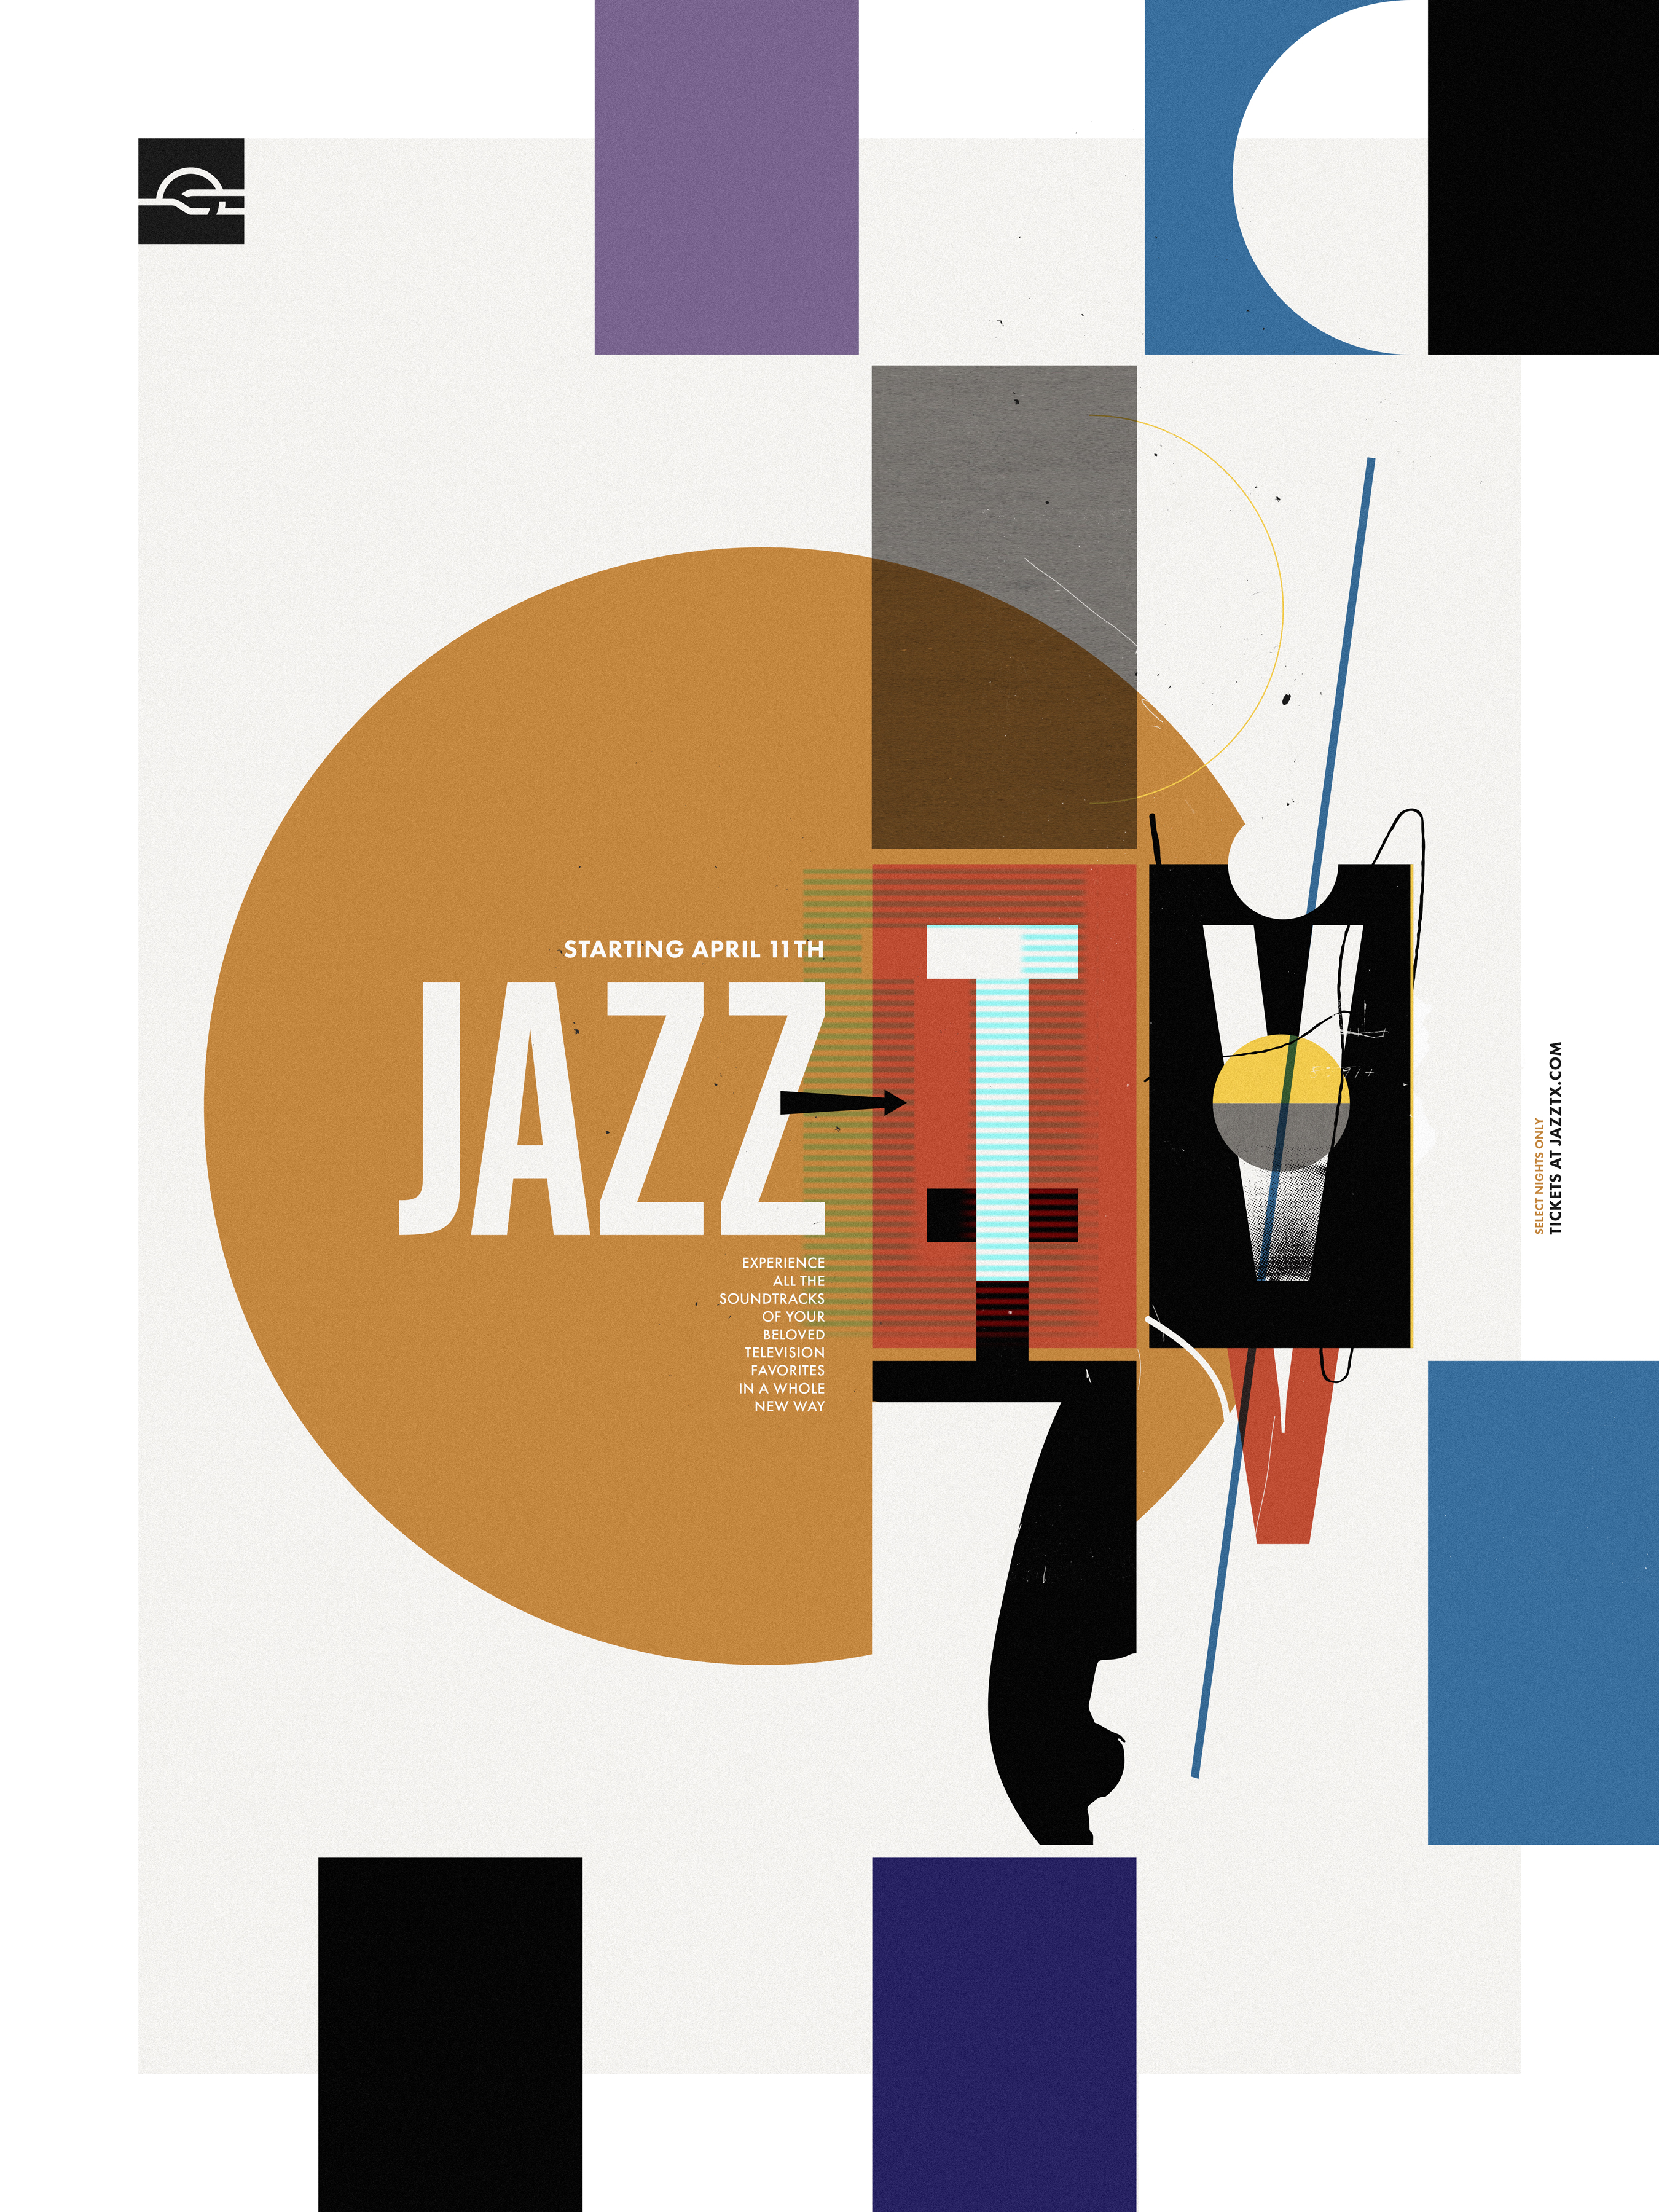 Jazz, TX Presents: Jazz, TV!